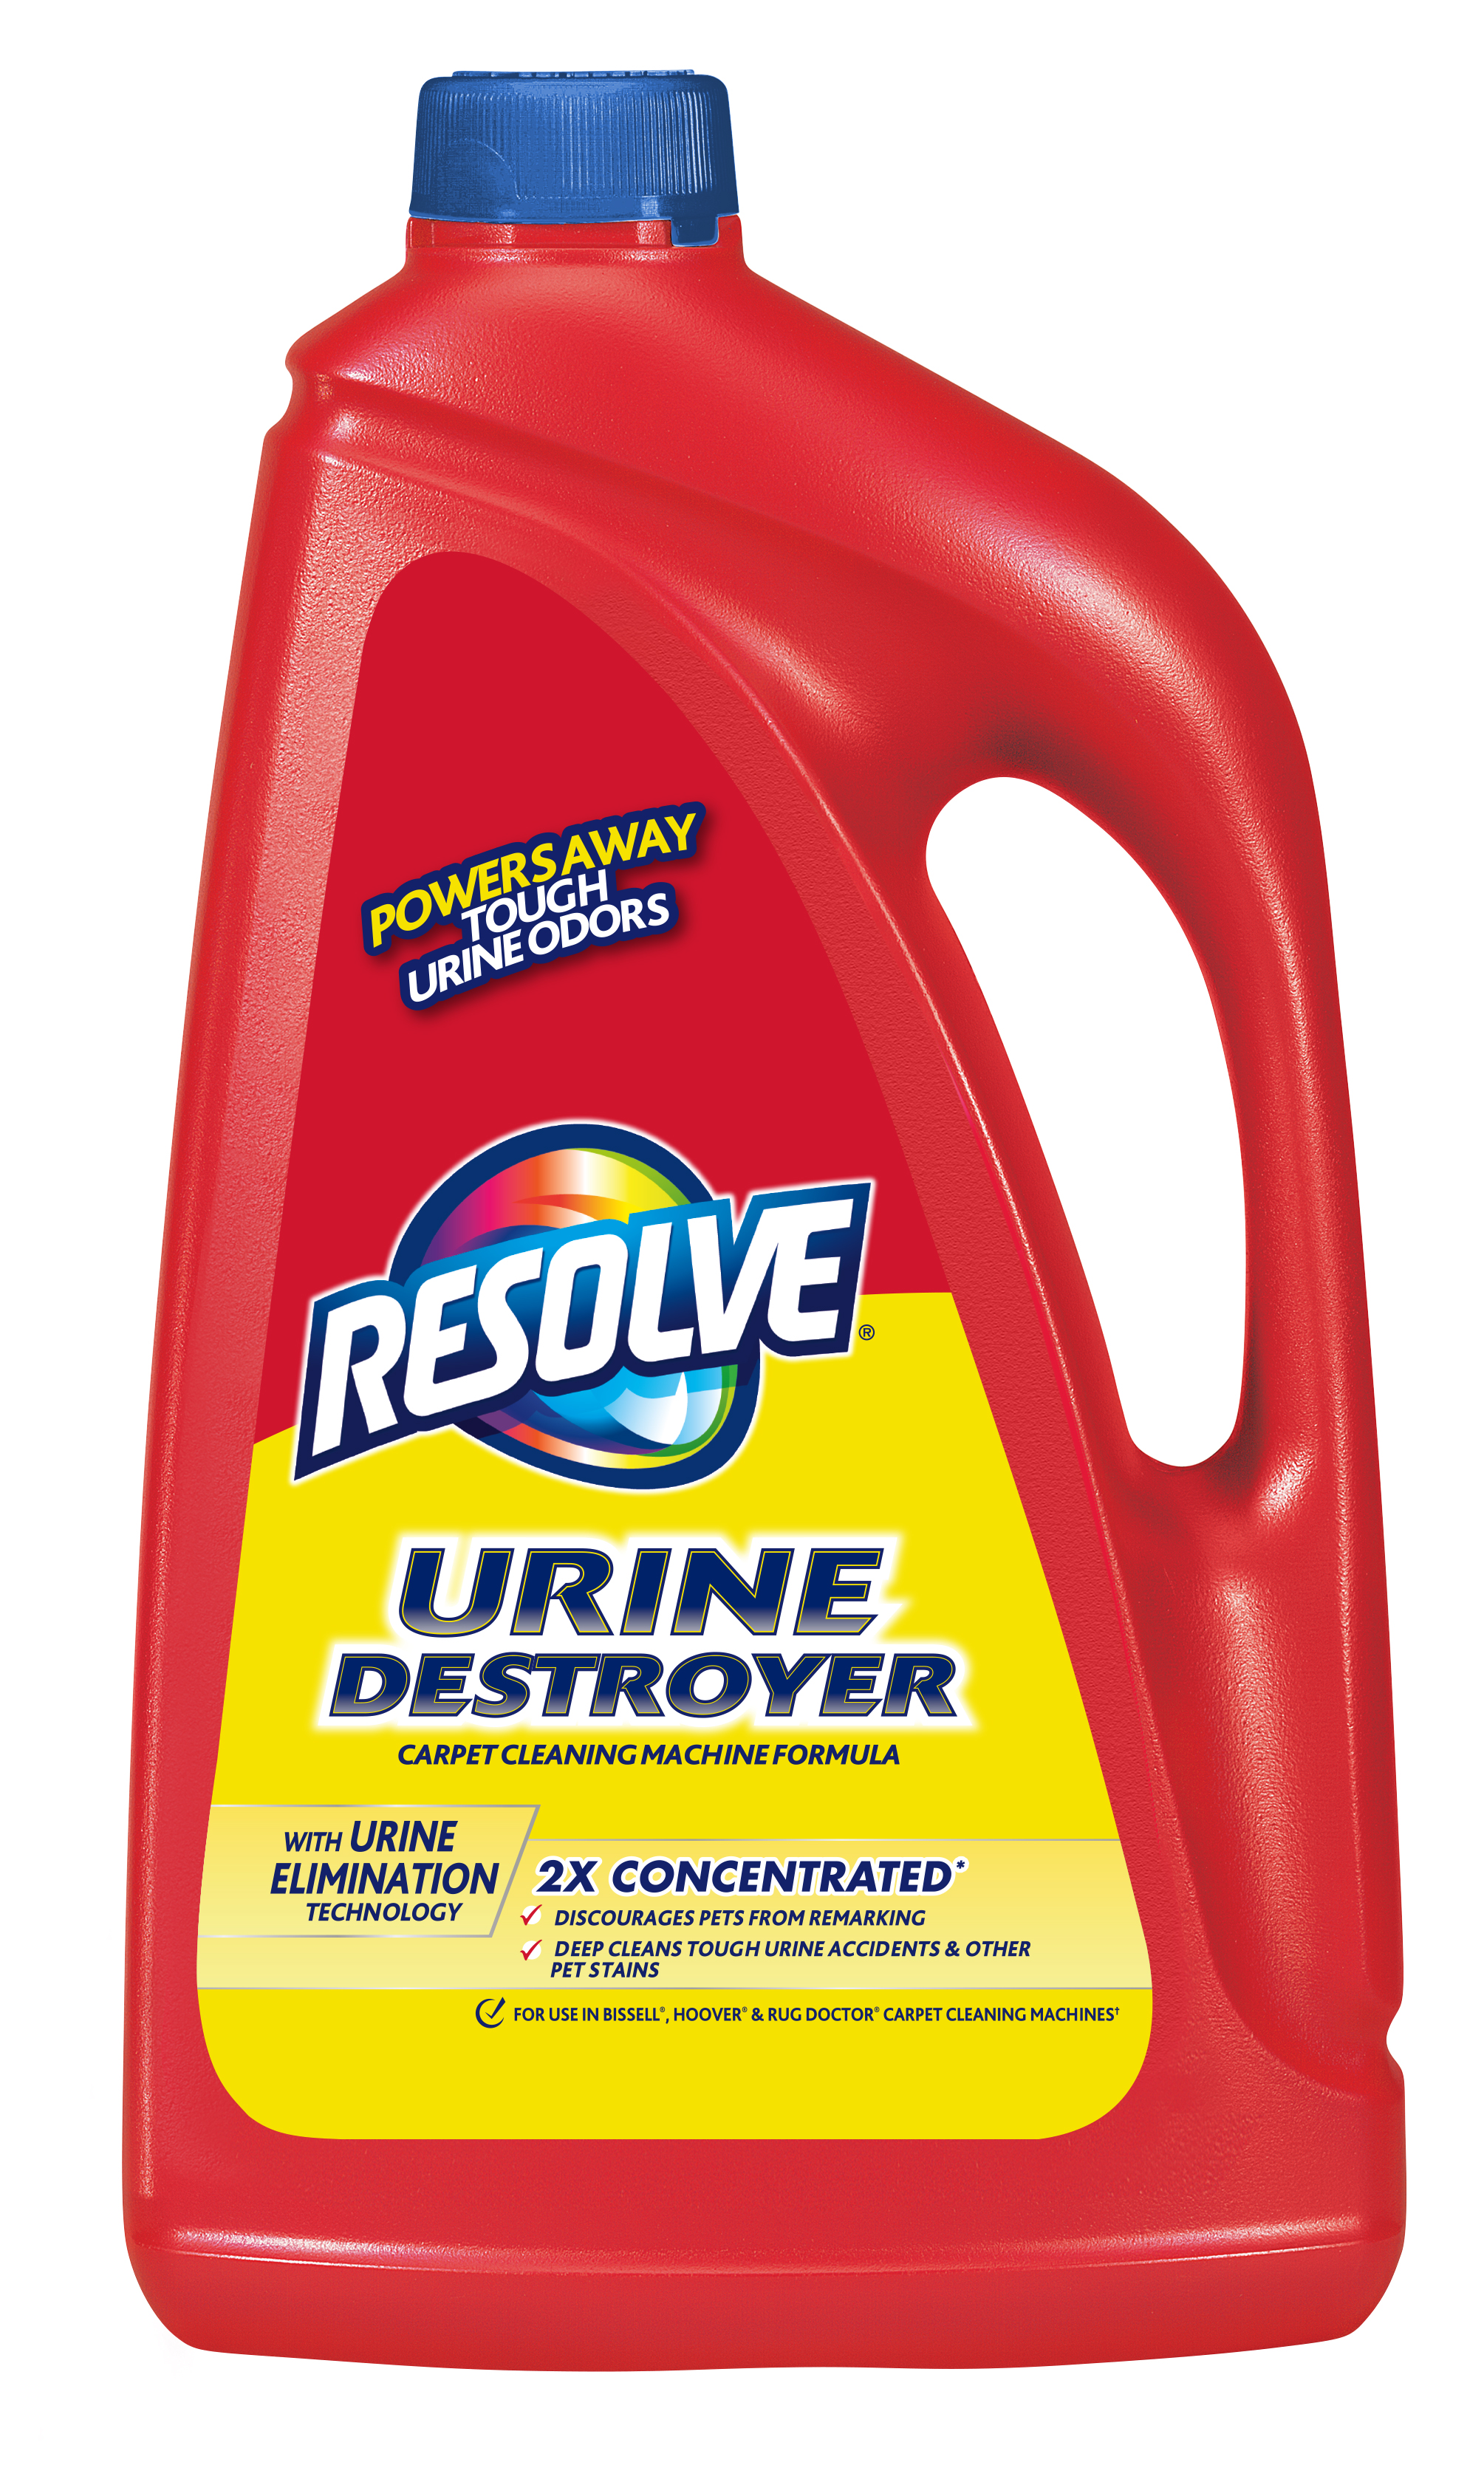 RESOLVE Carpet 2X Concentrate for Steam Urine Destroyer